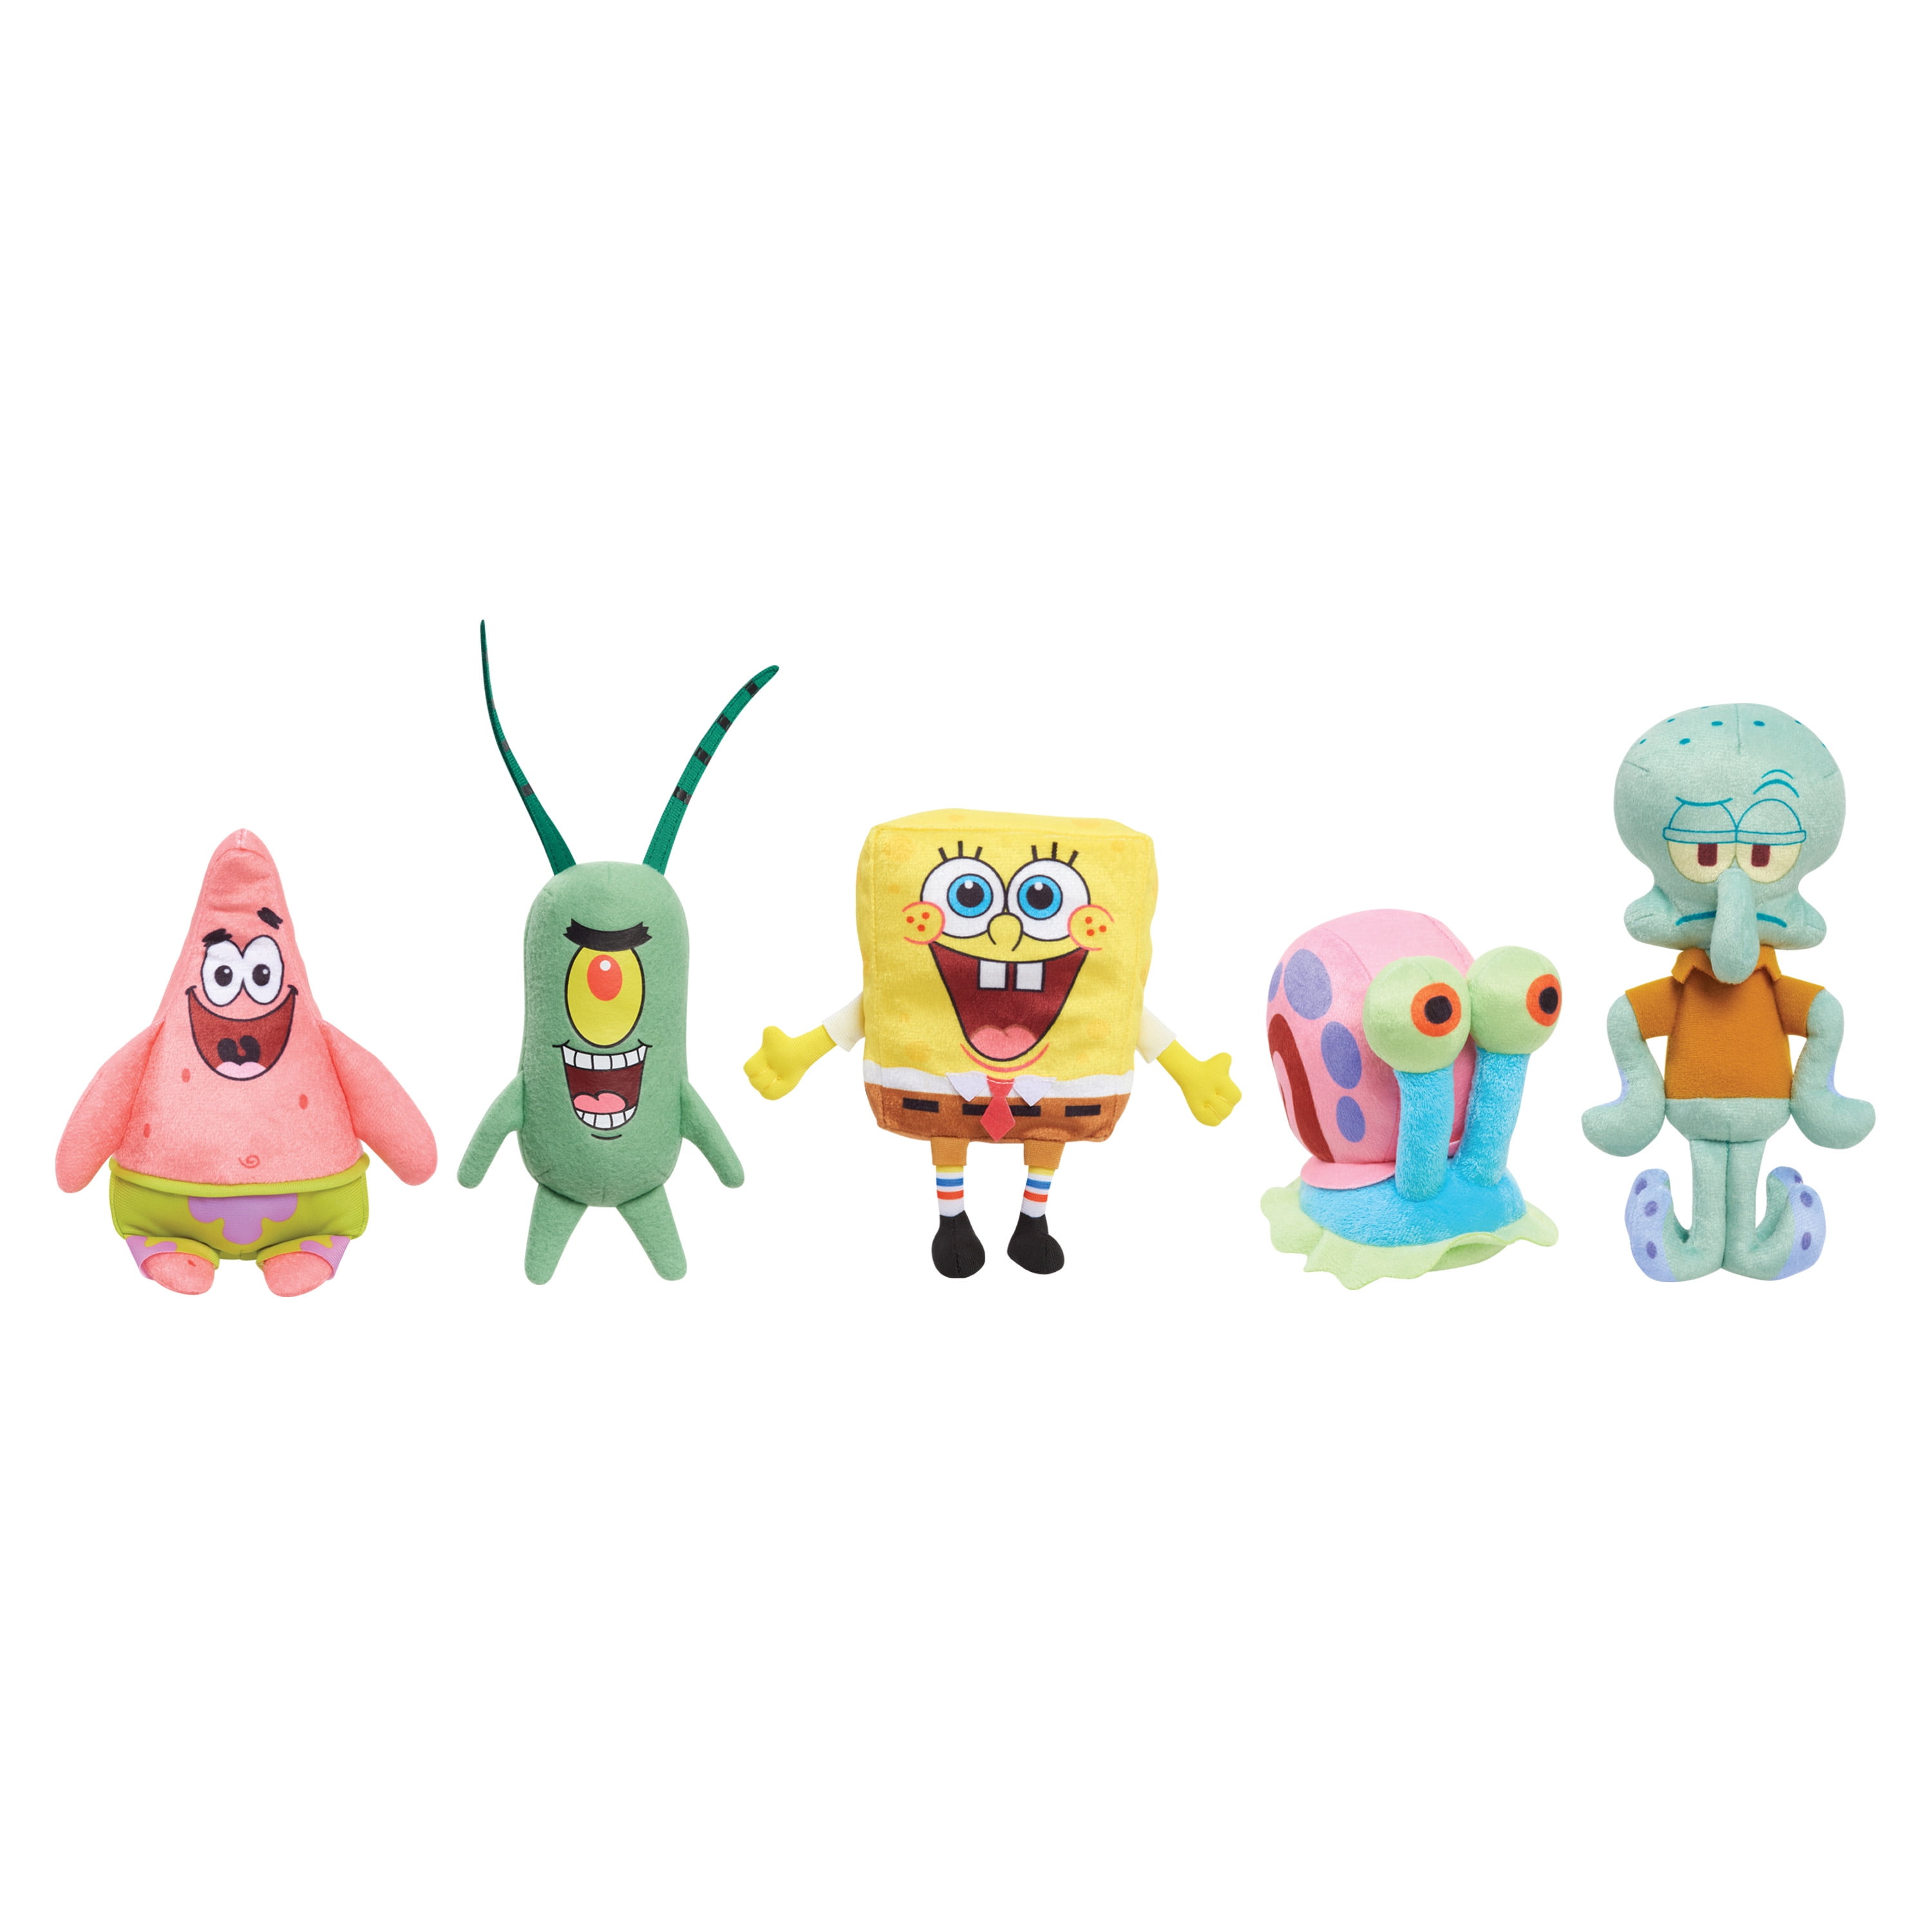 Spongebob Squarepants Spongebob Small Plush Doll 7" New 